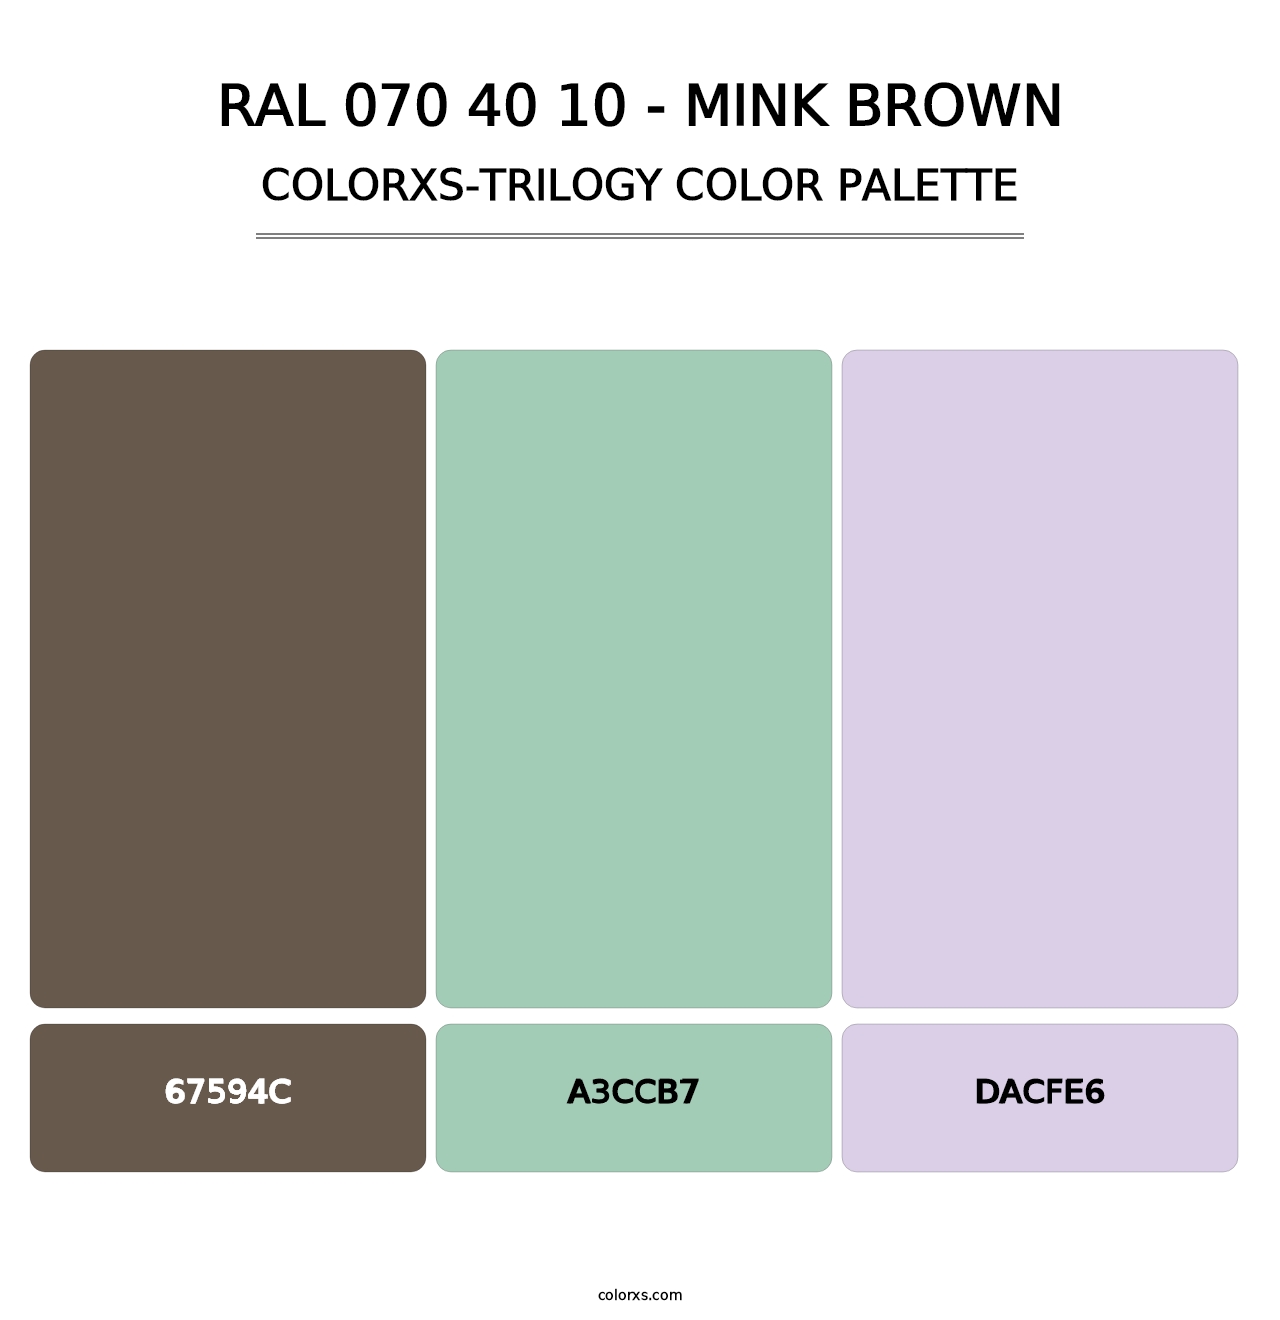 RAL 070 40 10 - Mink Brown - Colorxs Trilogy Palette